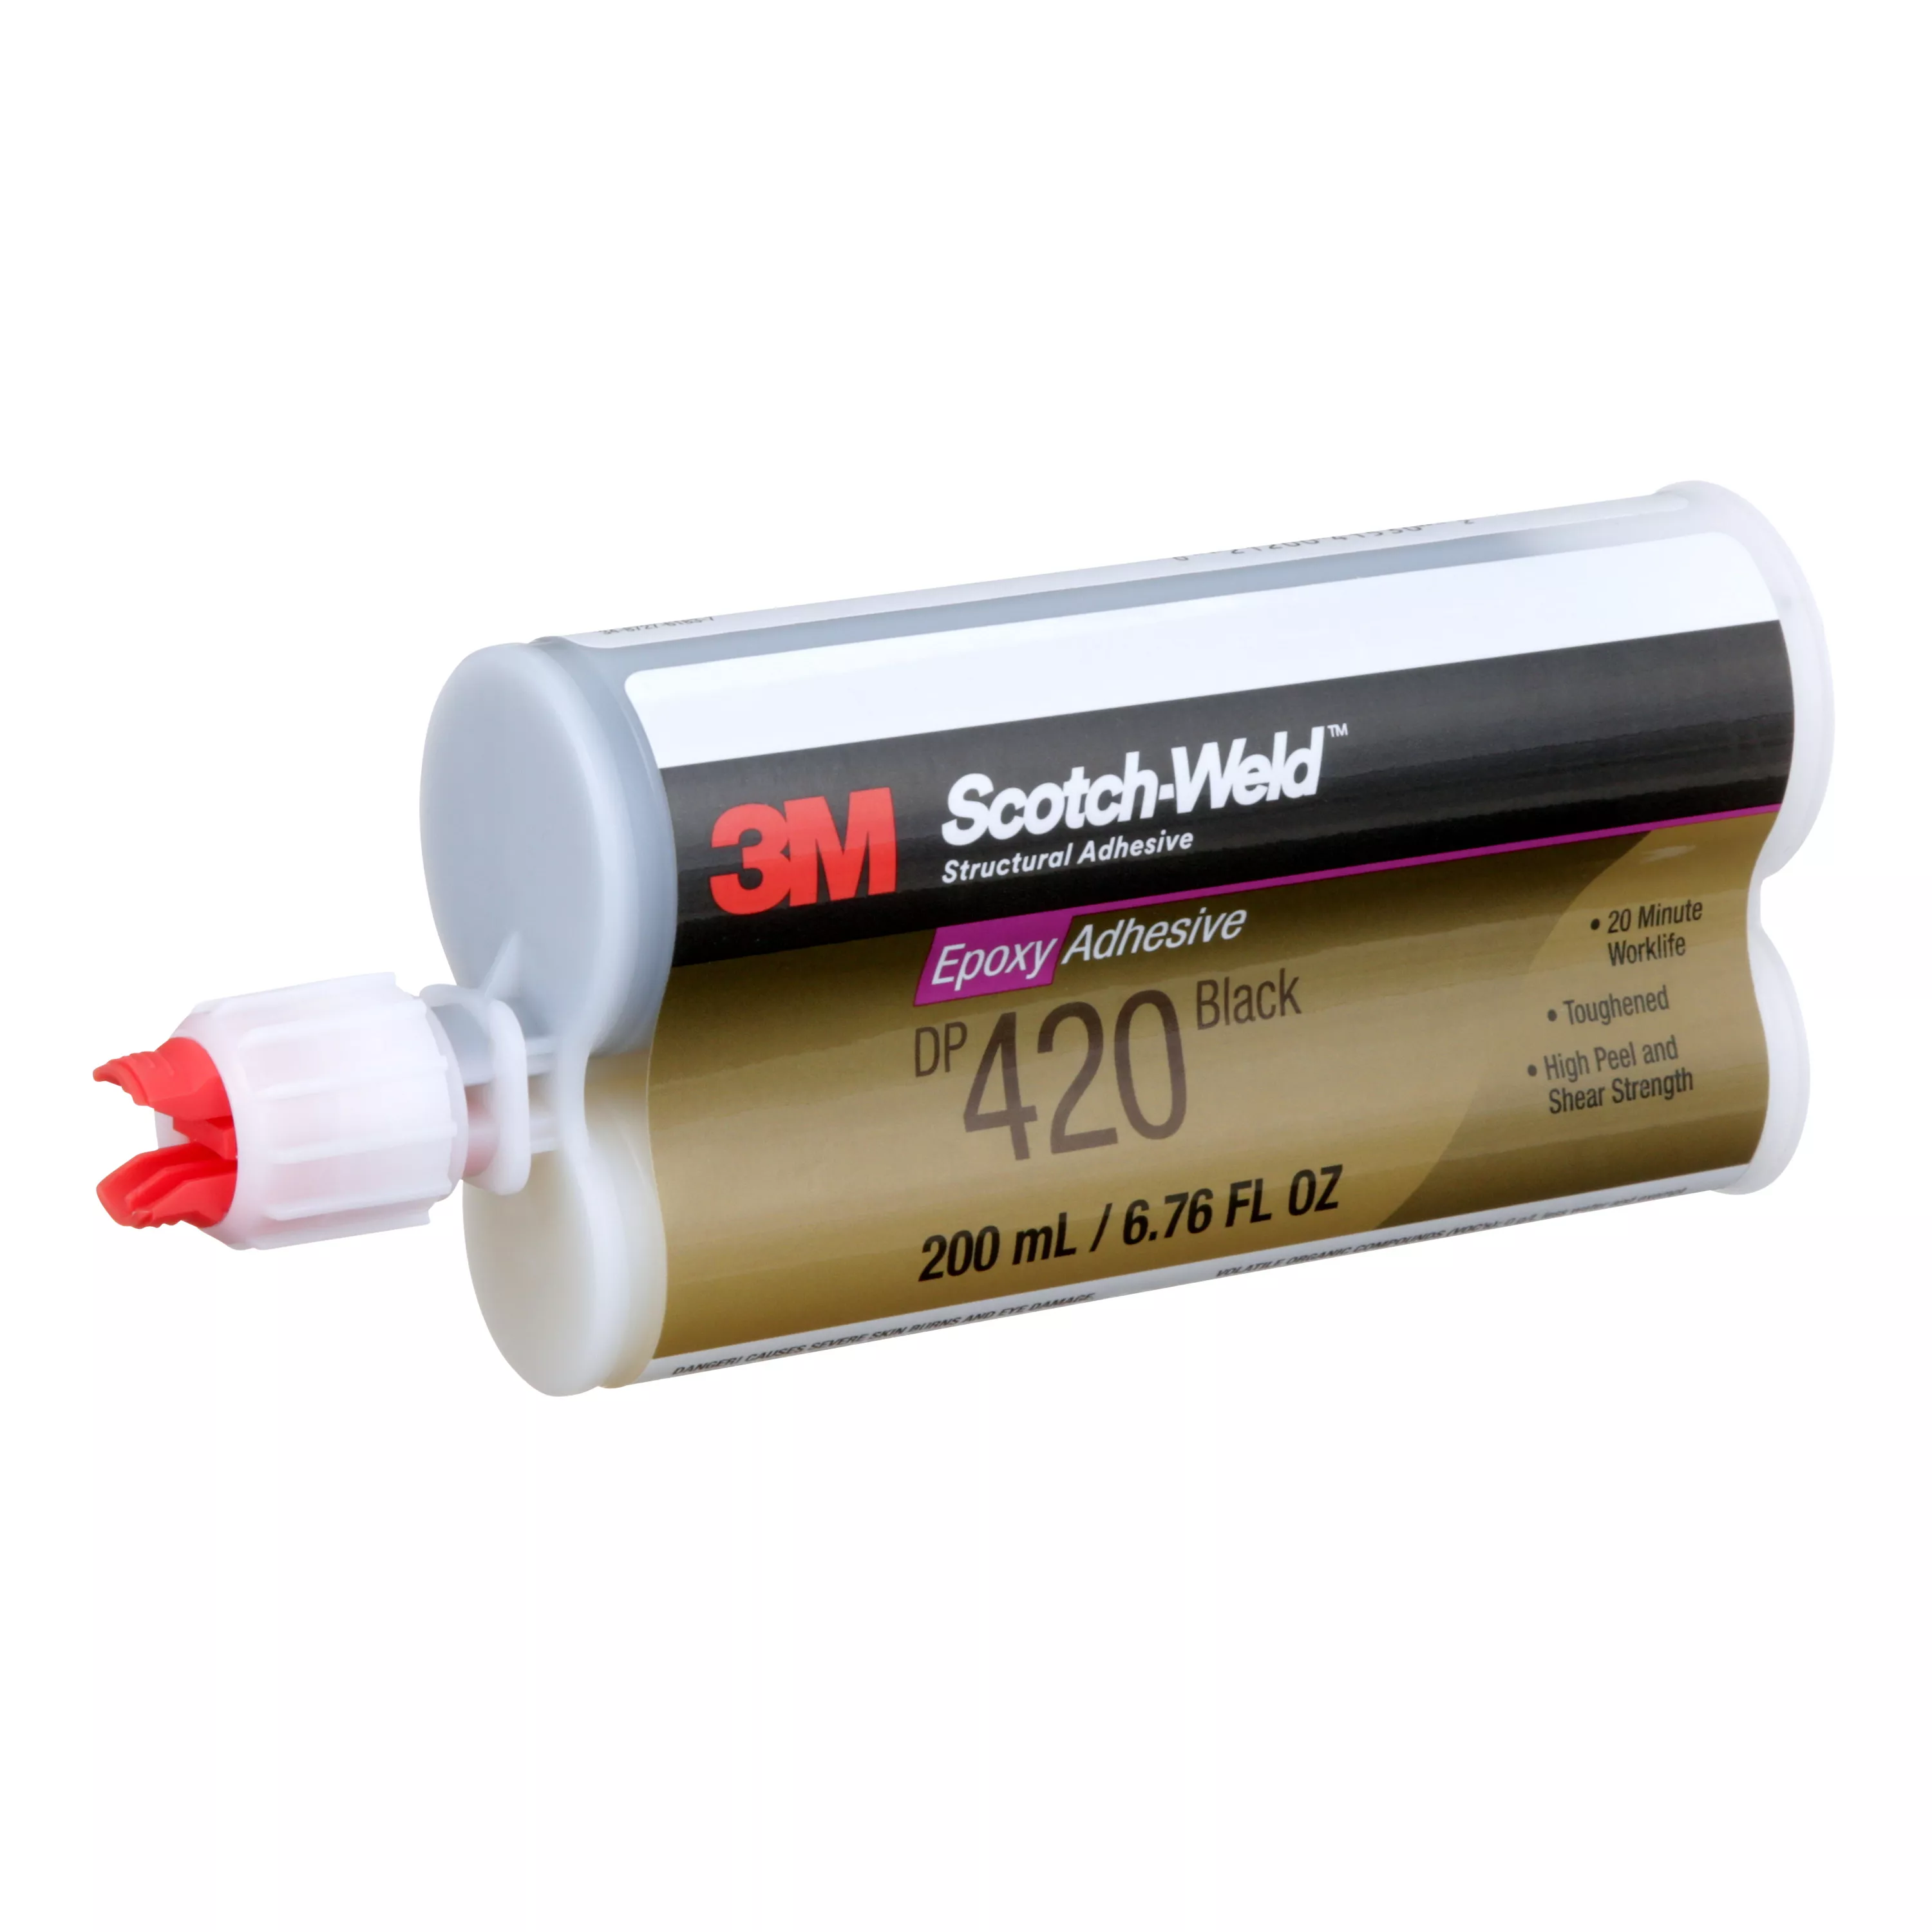 SKU 7100007956 | 3M™ Scotch-Weld™ Epoxy Adhesive DP420